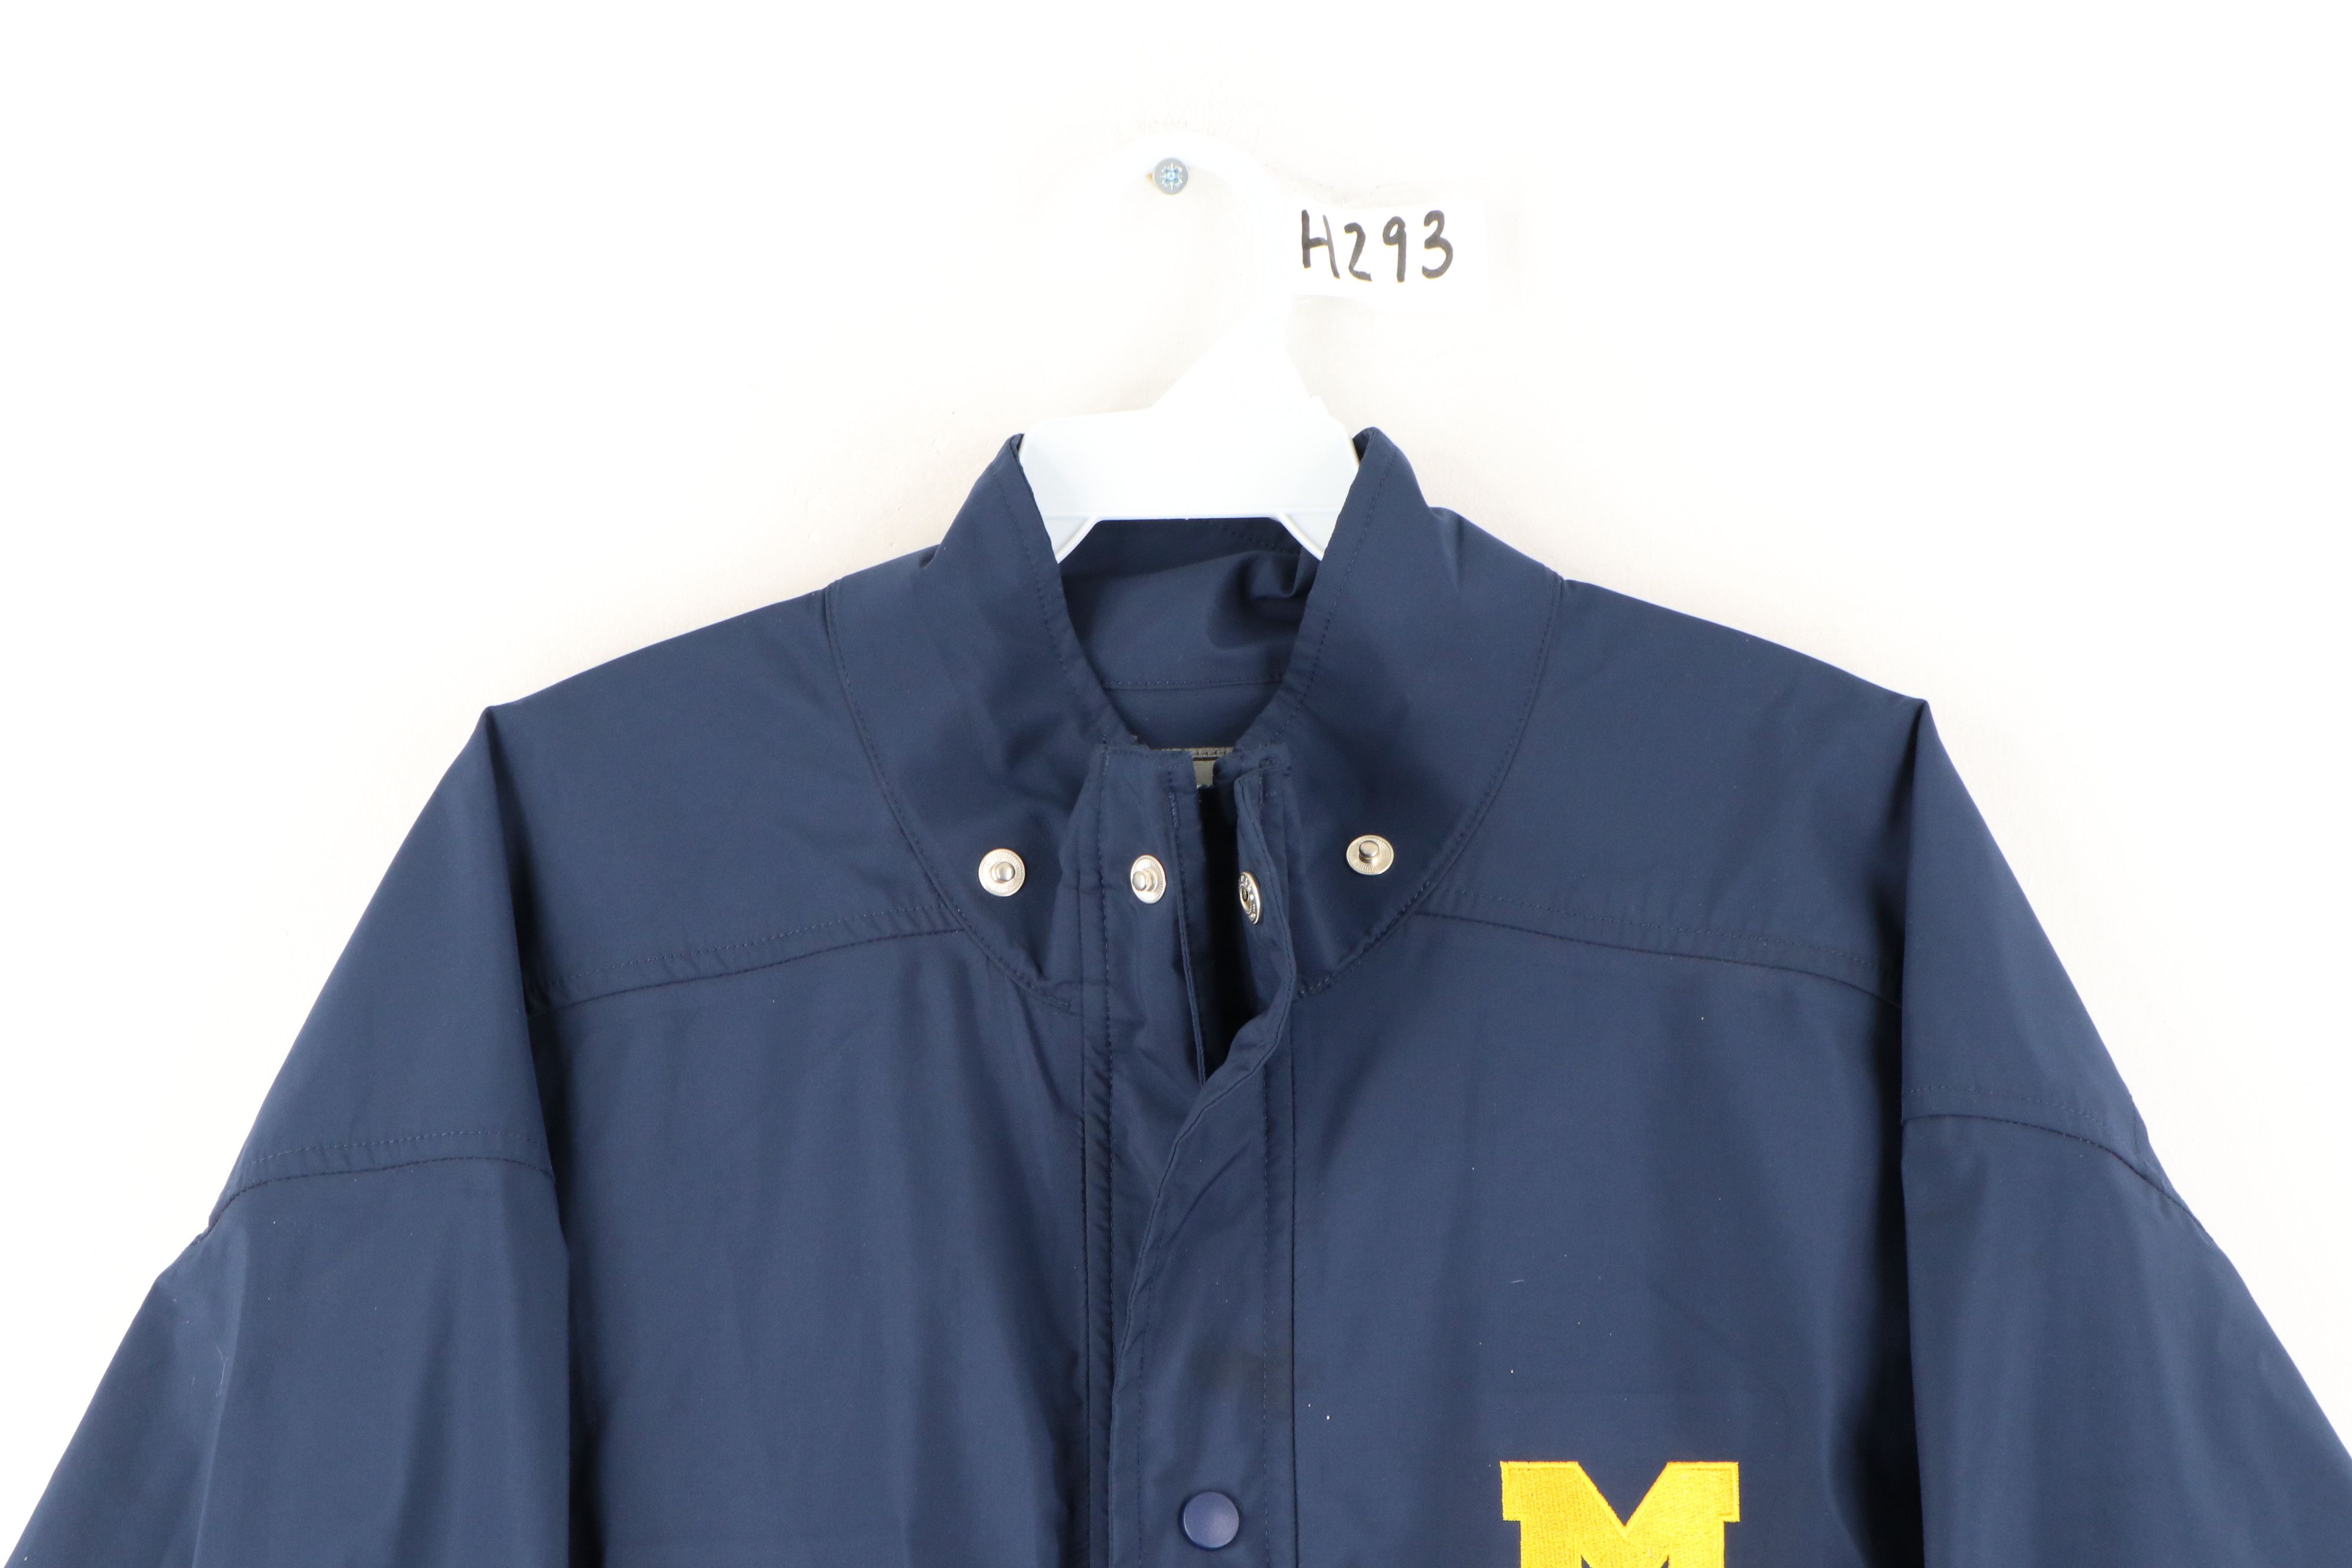 Nike Vintage Nike University of Michigan Football Team Jacket Size US L / EU 52-54 / 3 - 2 Preview